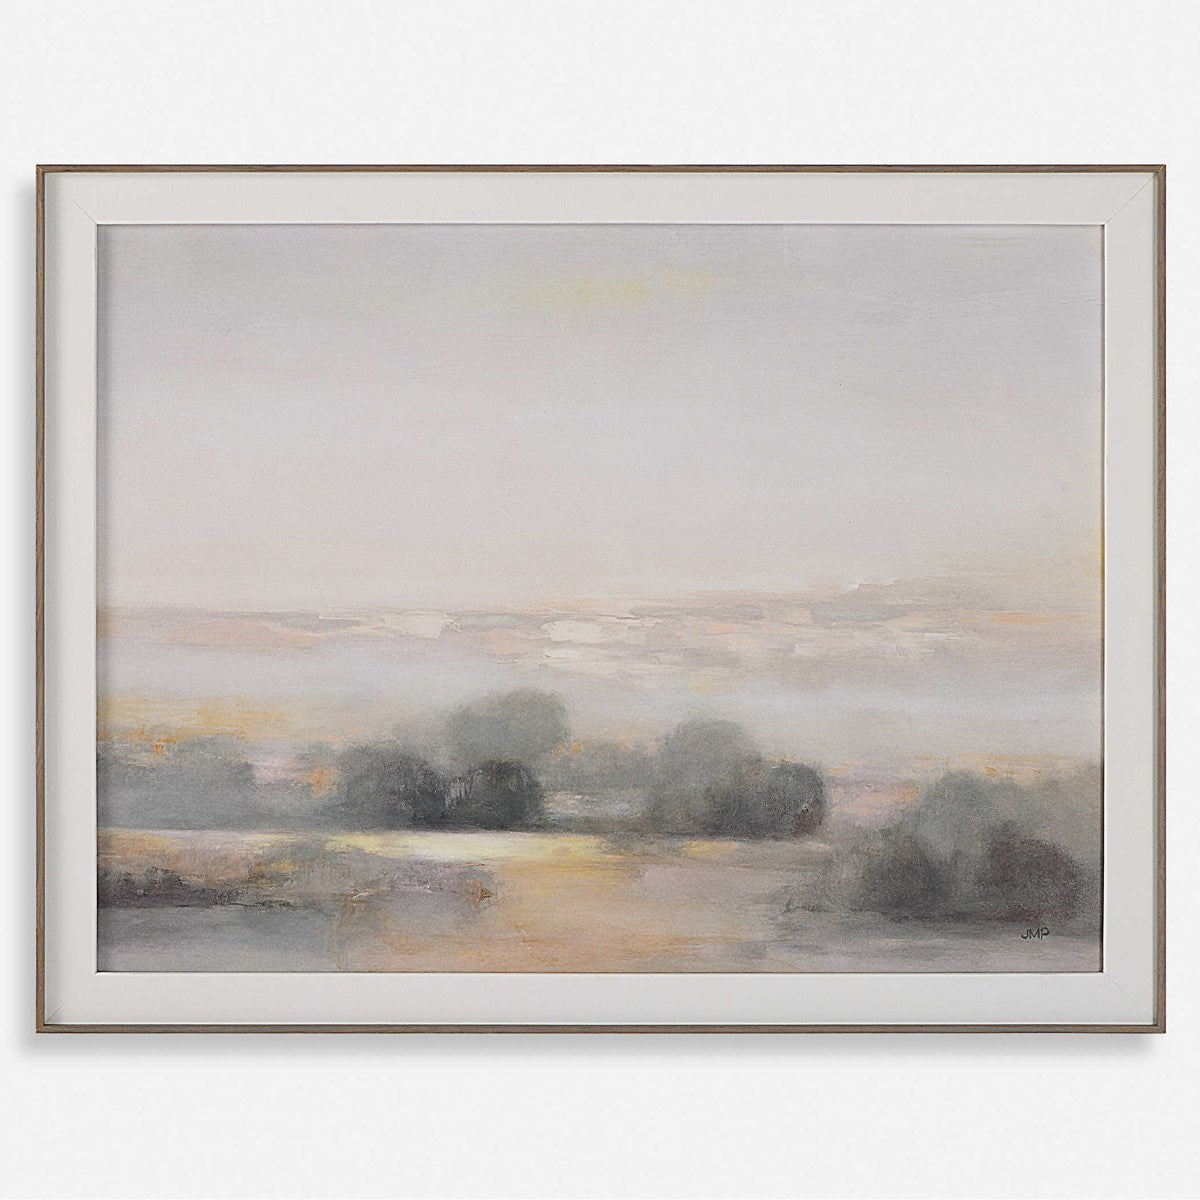 Uttermost - 32349 - Landscape Print - Atmospheric Neutral - Light Gray